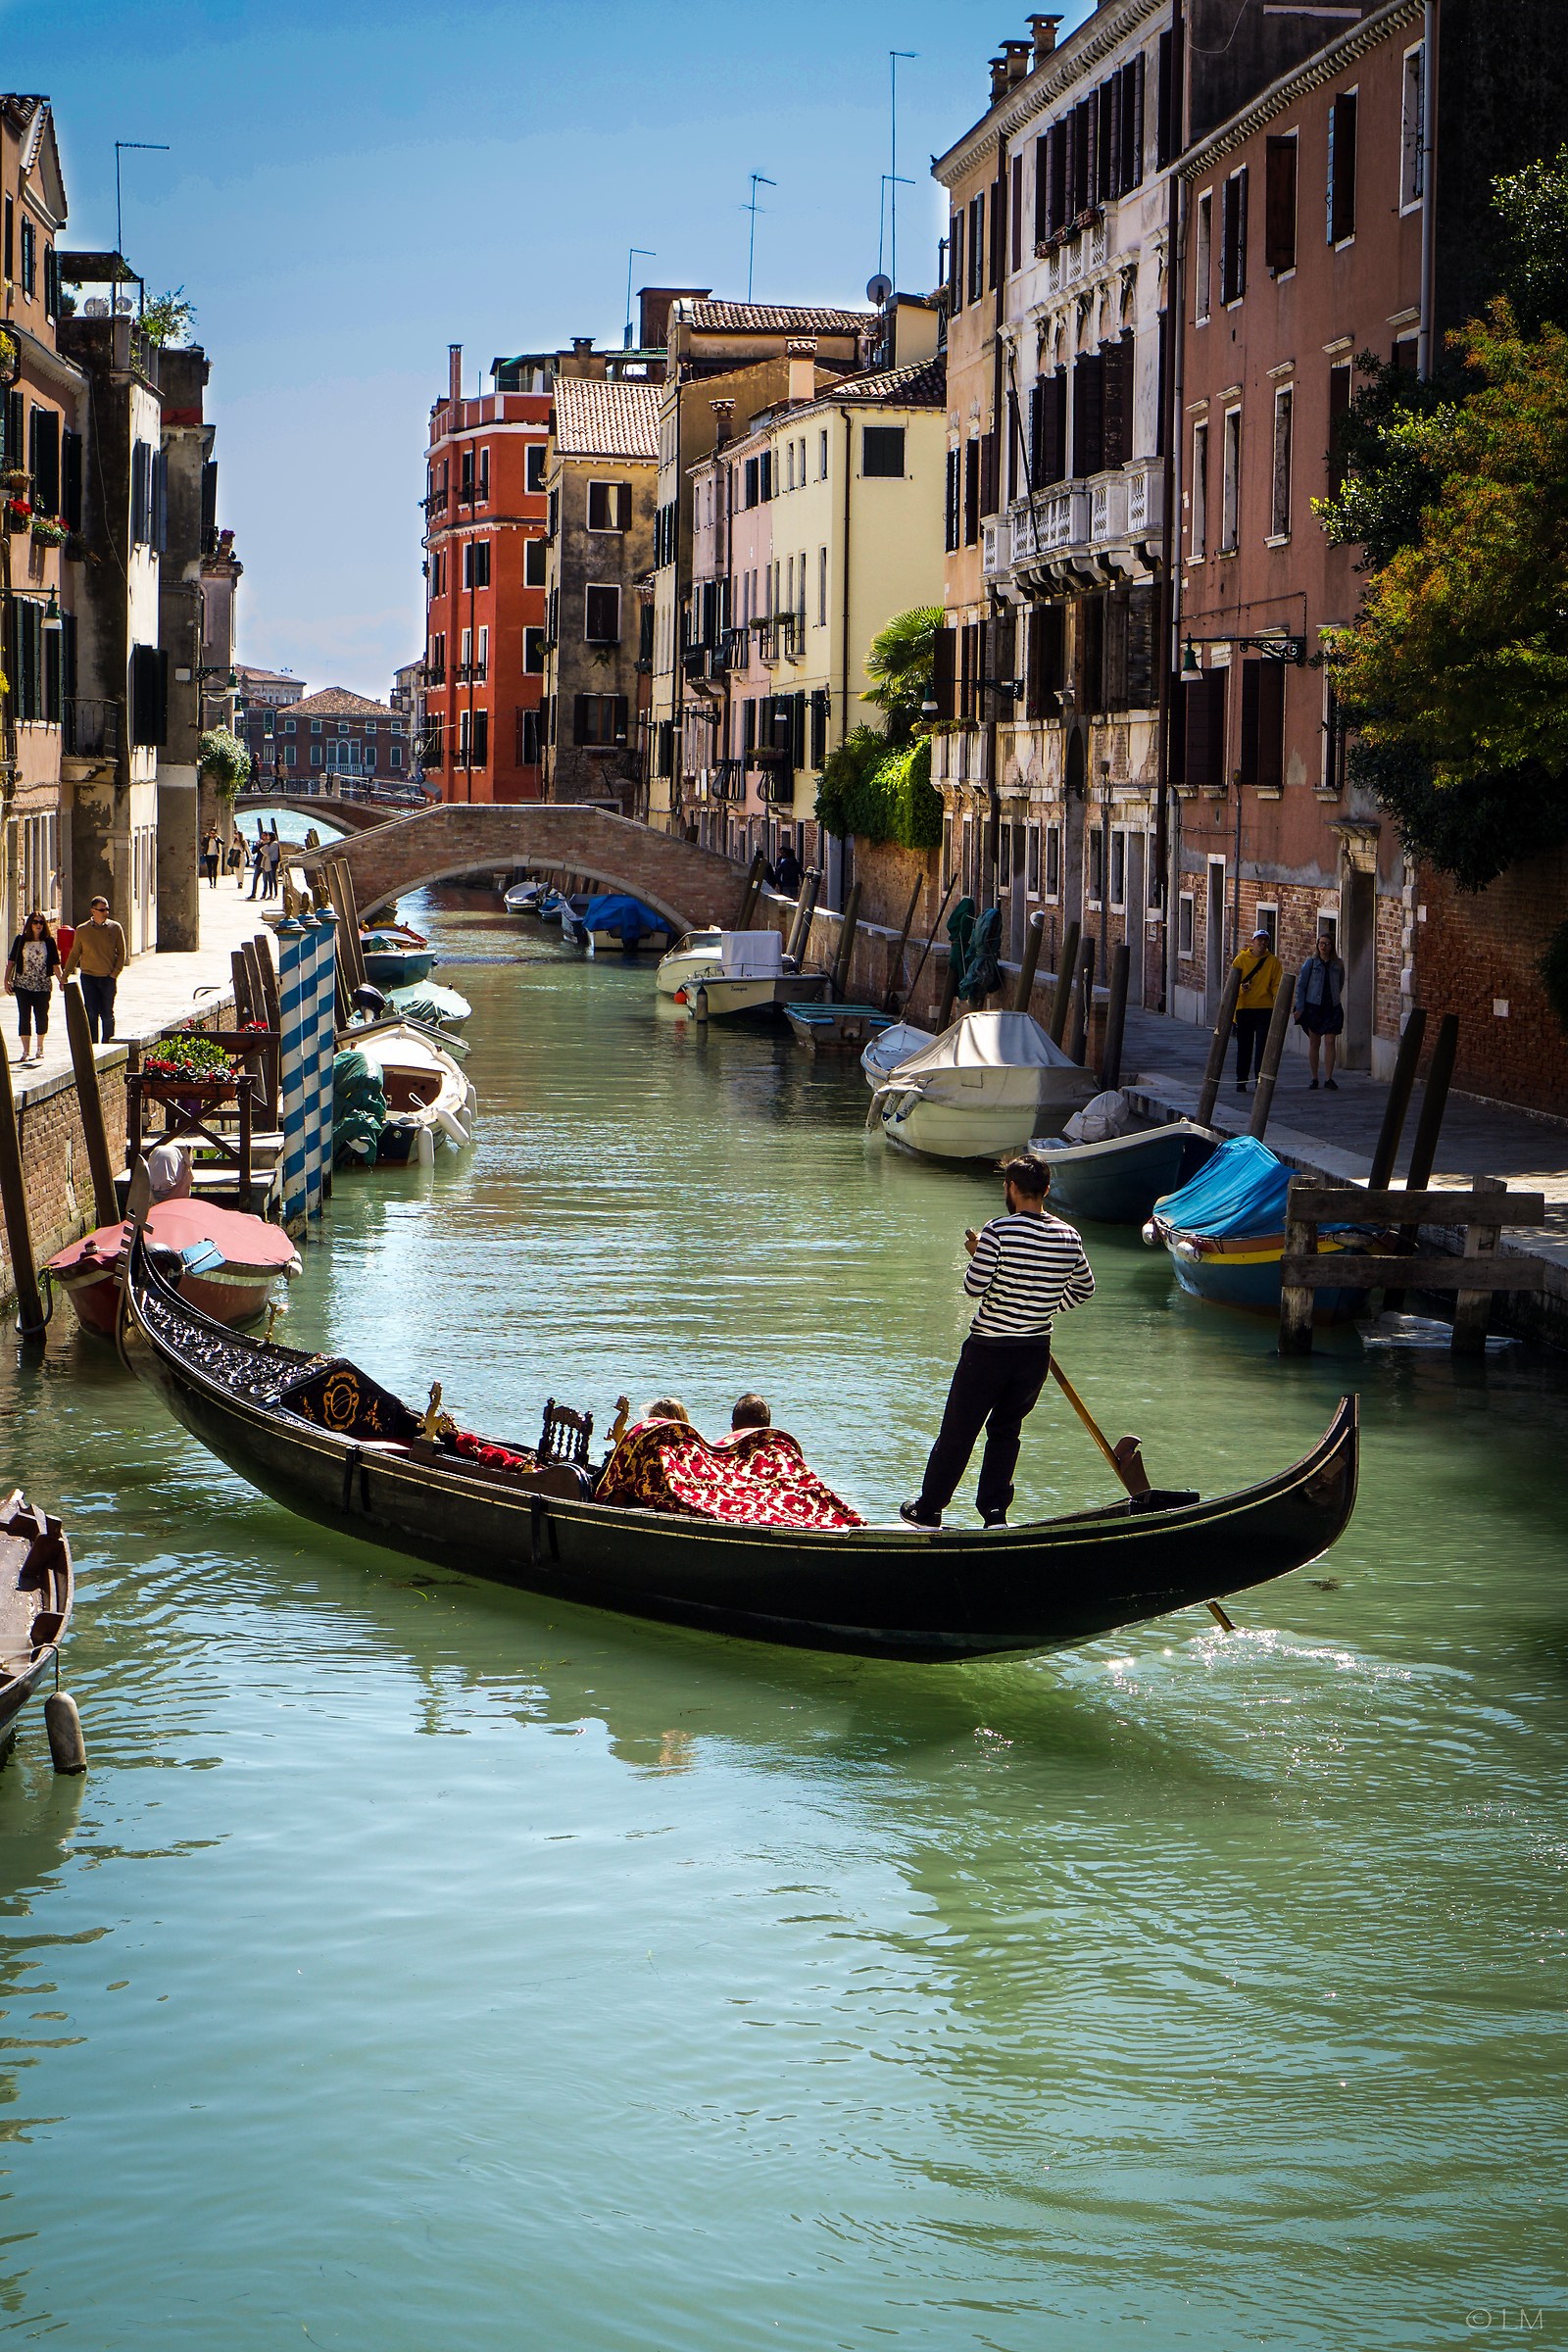 The beauty of Venice...